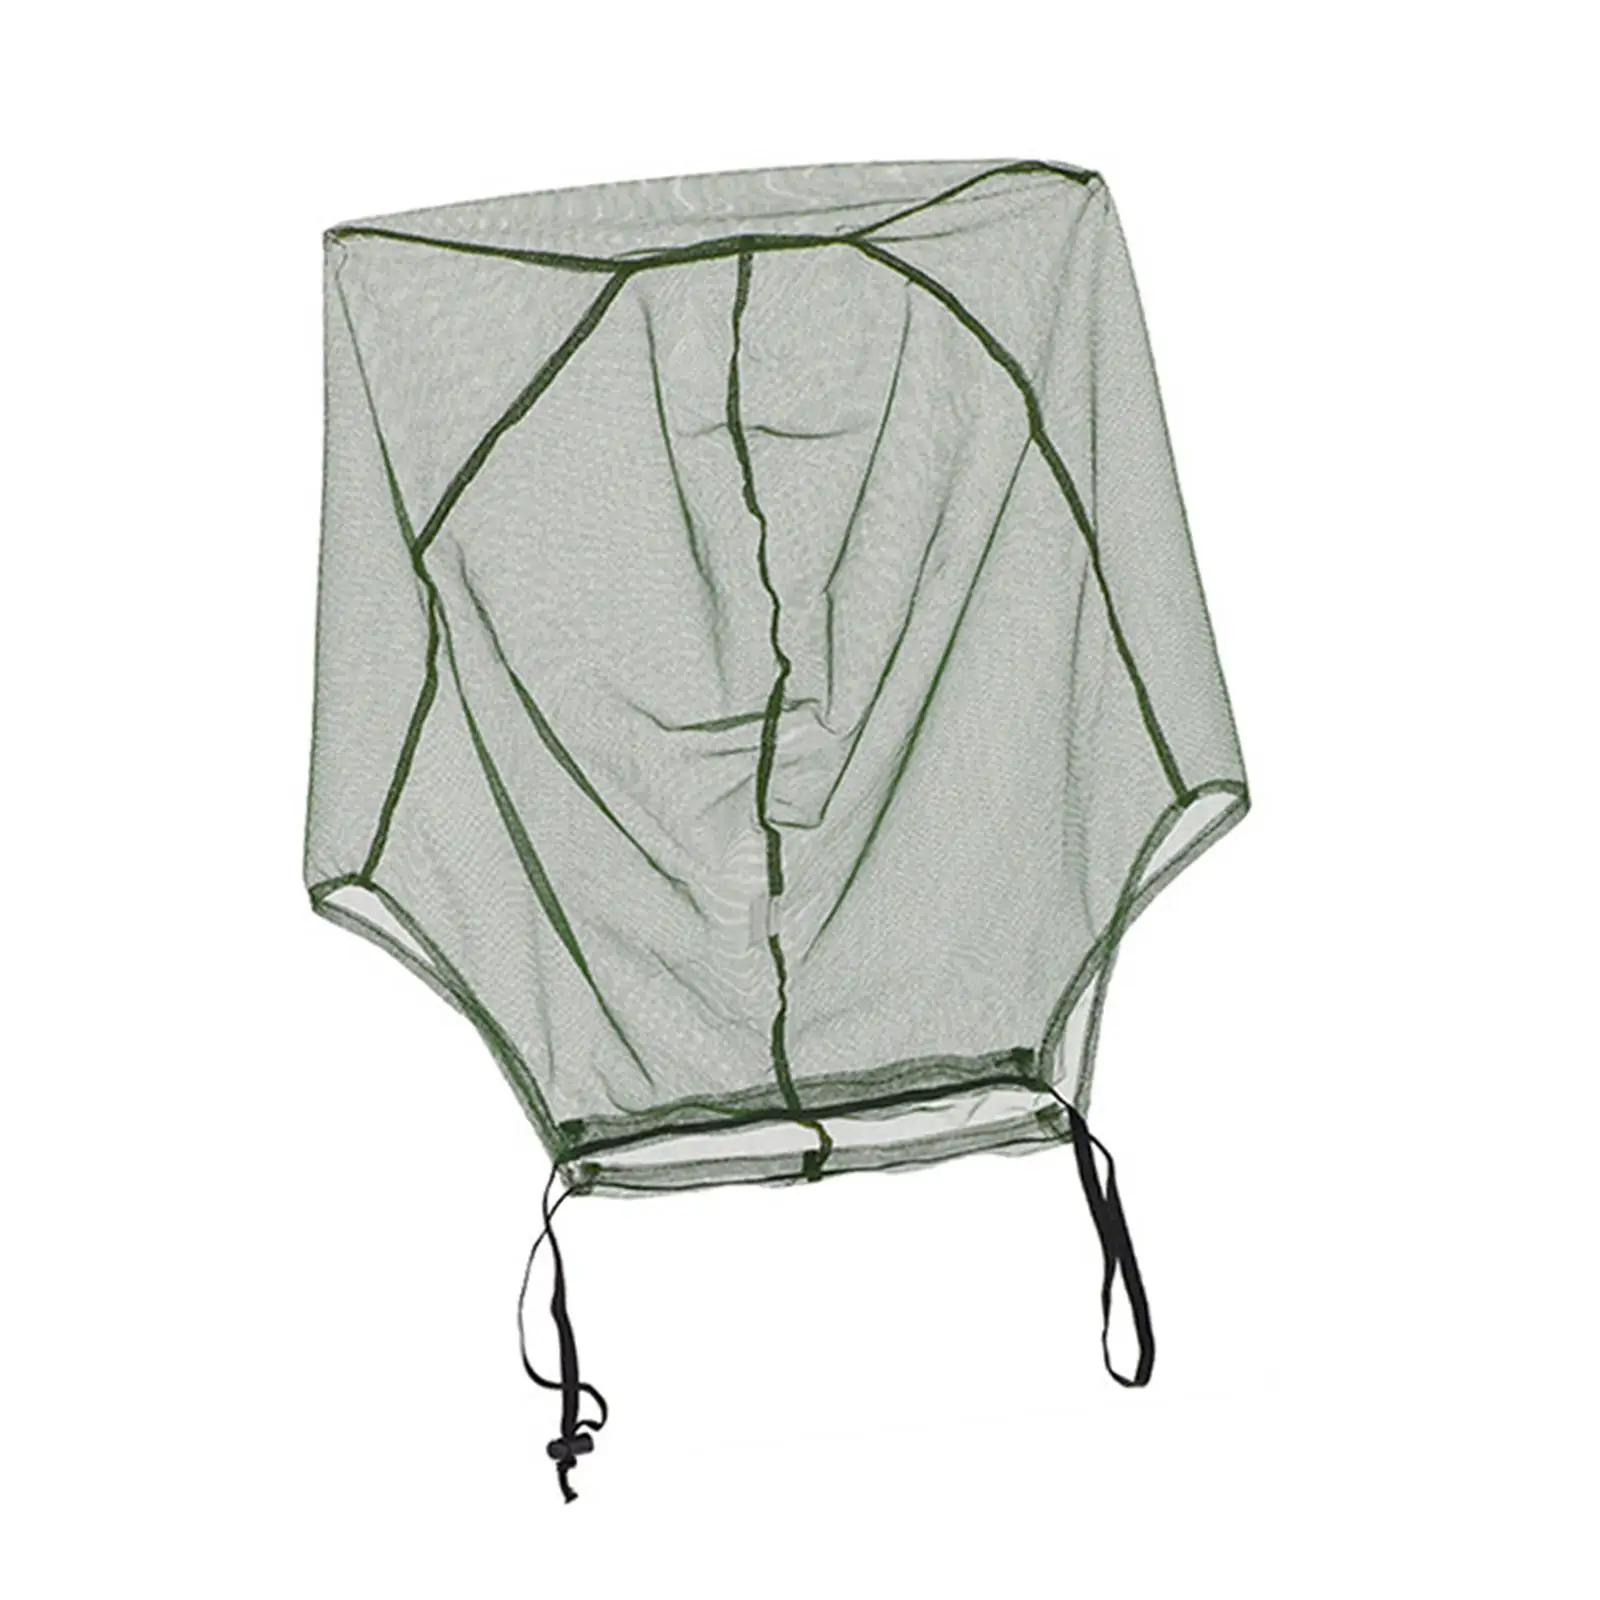 Face Mesh Net Durable Head Protecting Net for Fishing Walking Outdoor Hiking